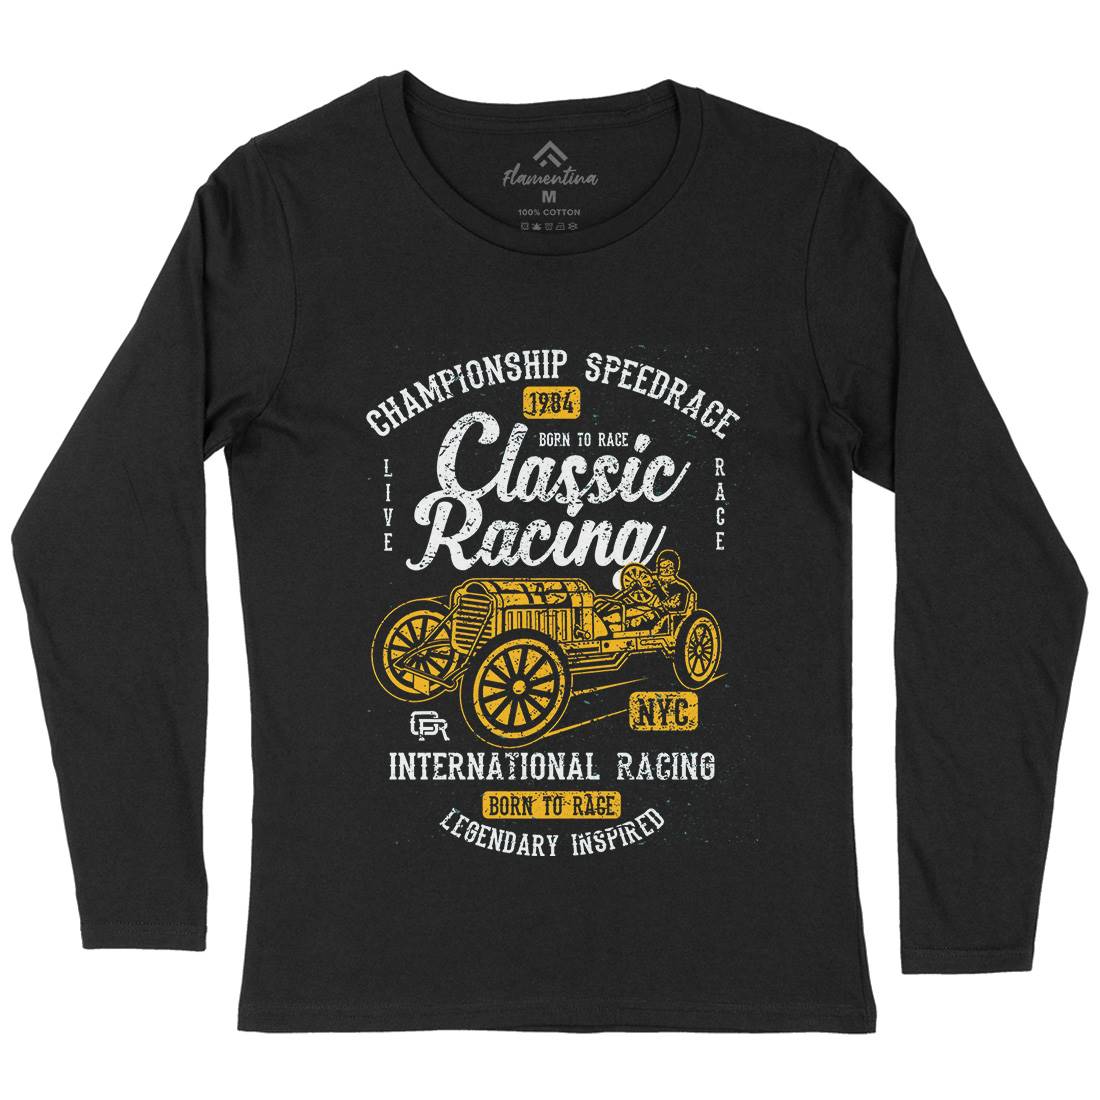 Classic Racing Womens Long Sleeve T-Shirt Cars A037